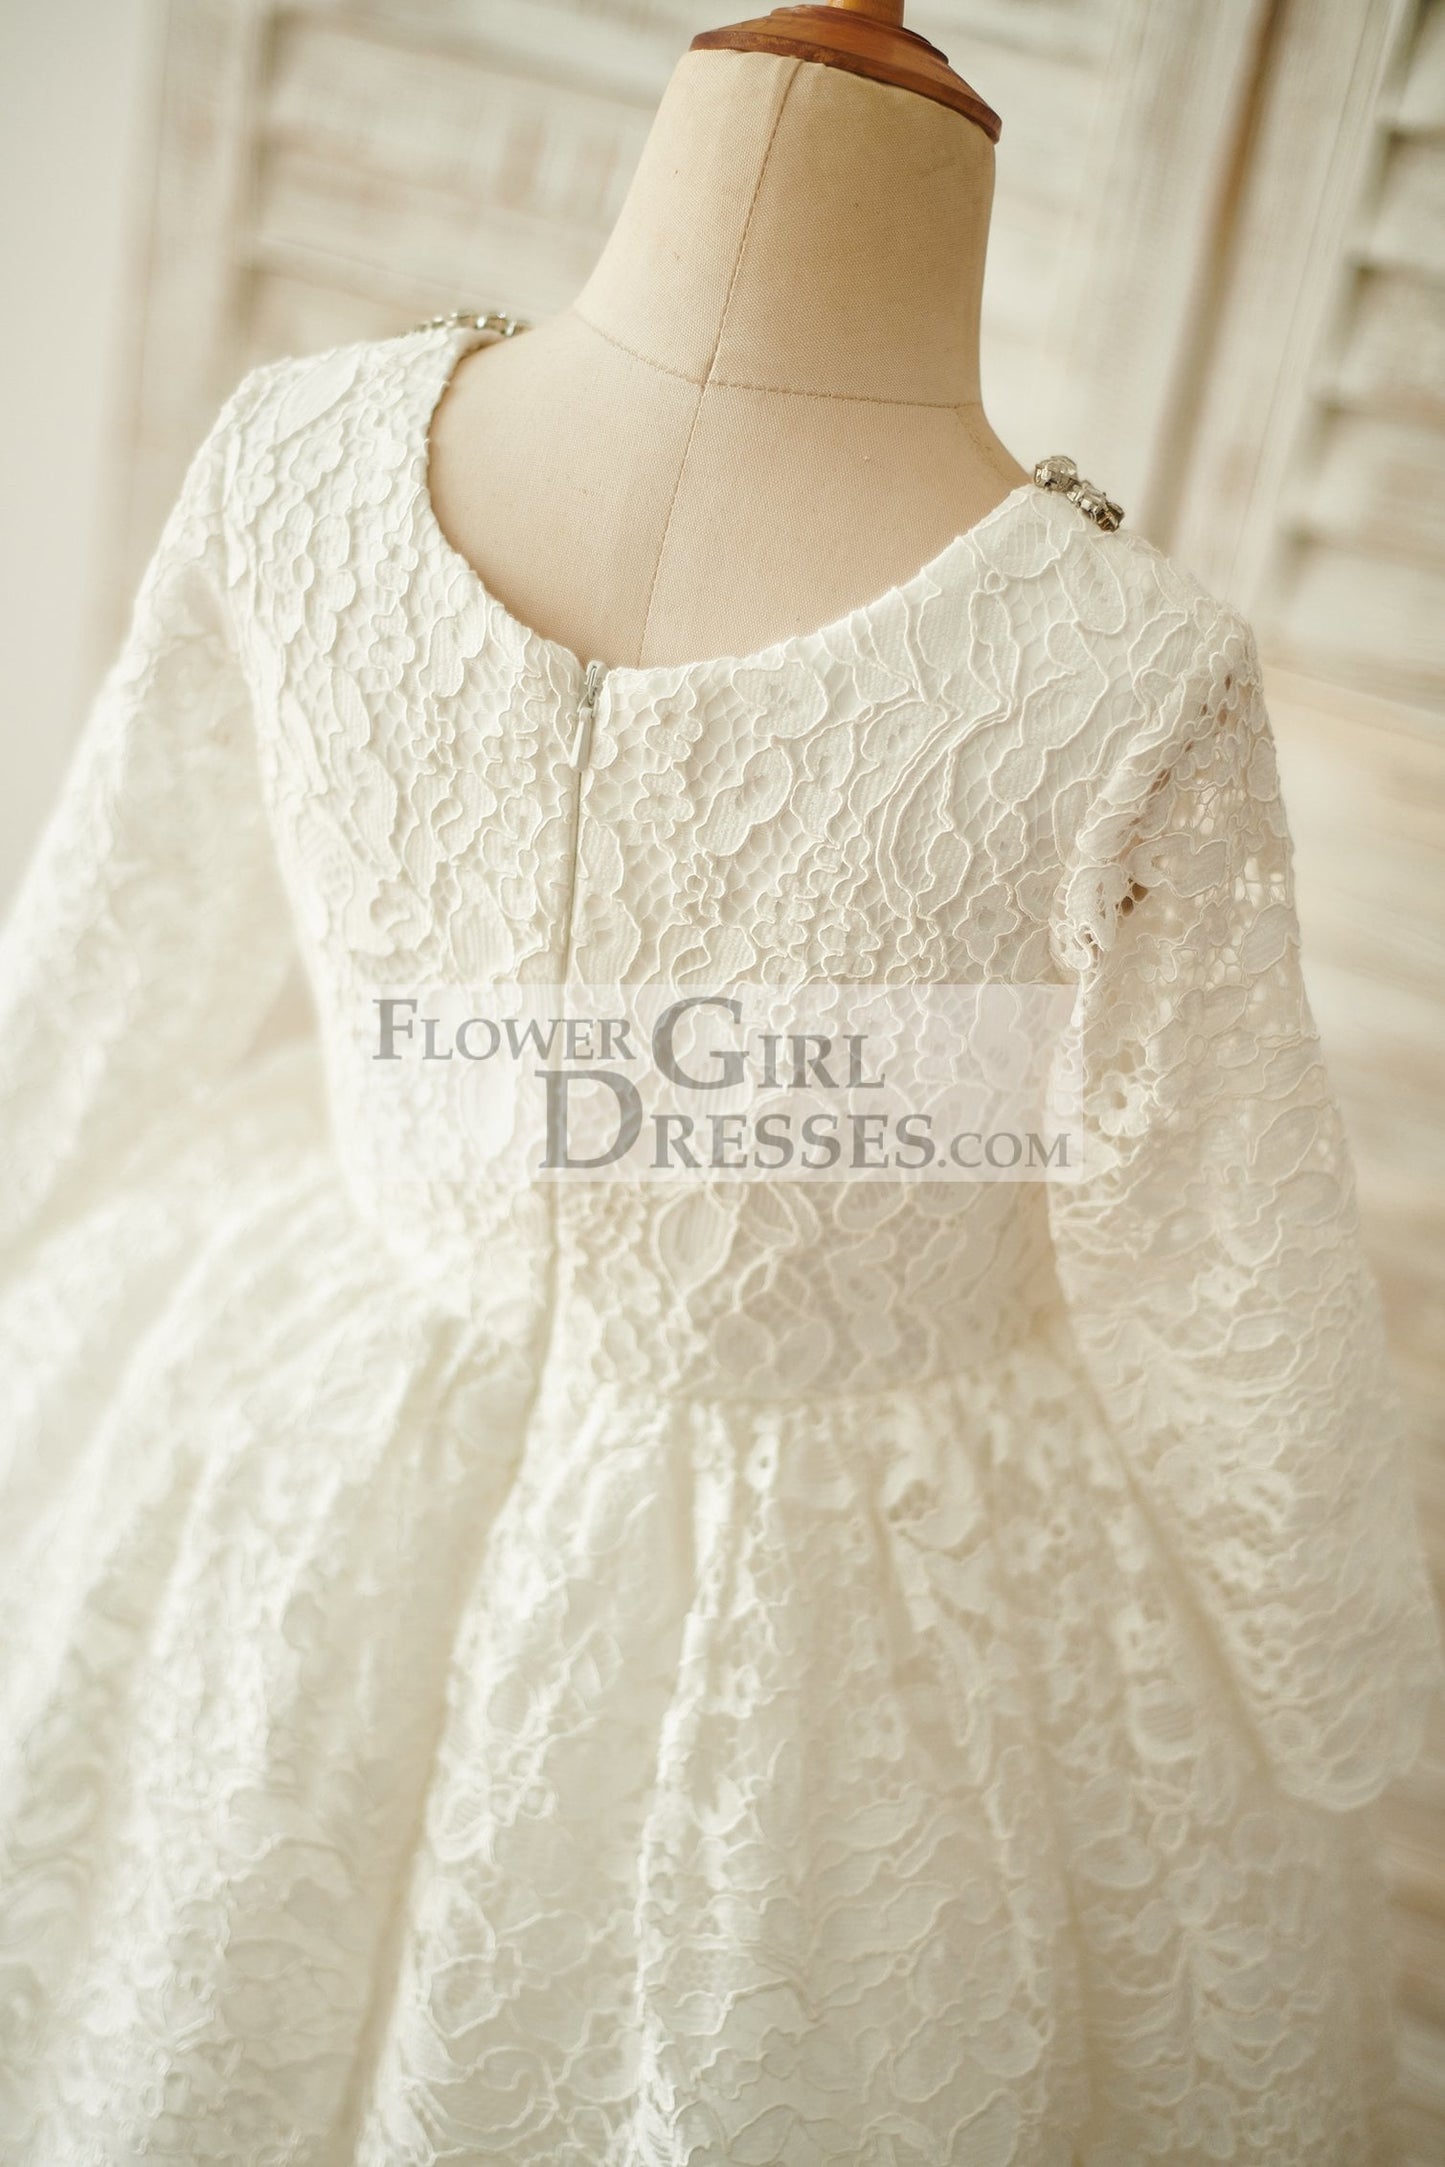 Ivory Lace Long Sleeves Wedding Flower Girl Dress with Beading Neck